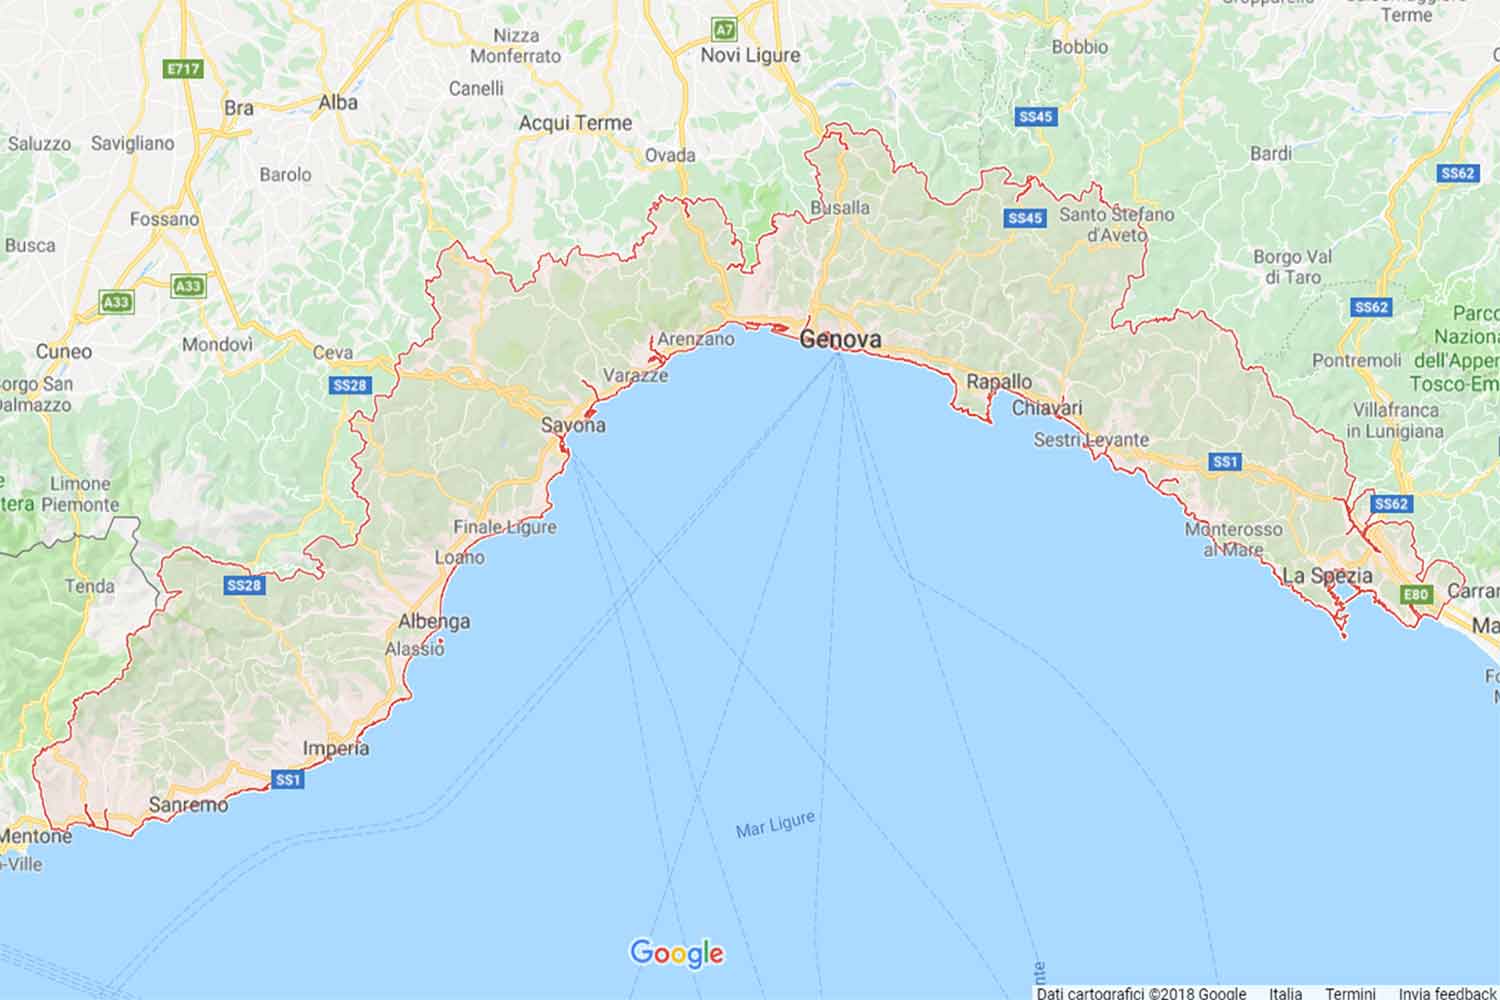 Liguria - Genova - Sori Preventivi Veloci google maps